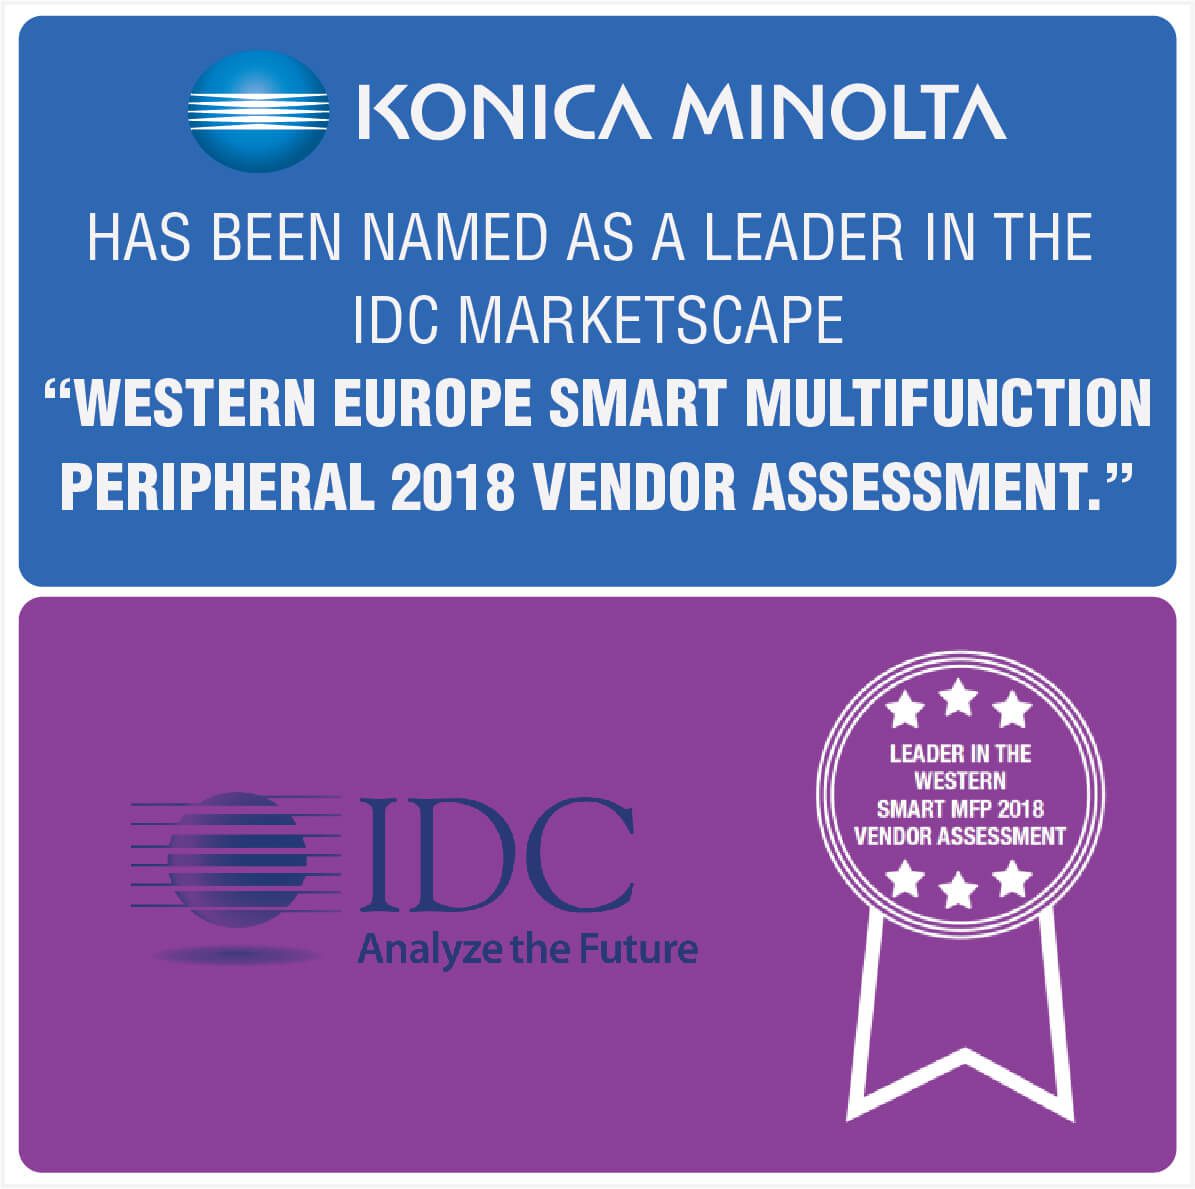 IDC MarketScape names Konica Minolta as a Leader in Smart MFP